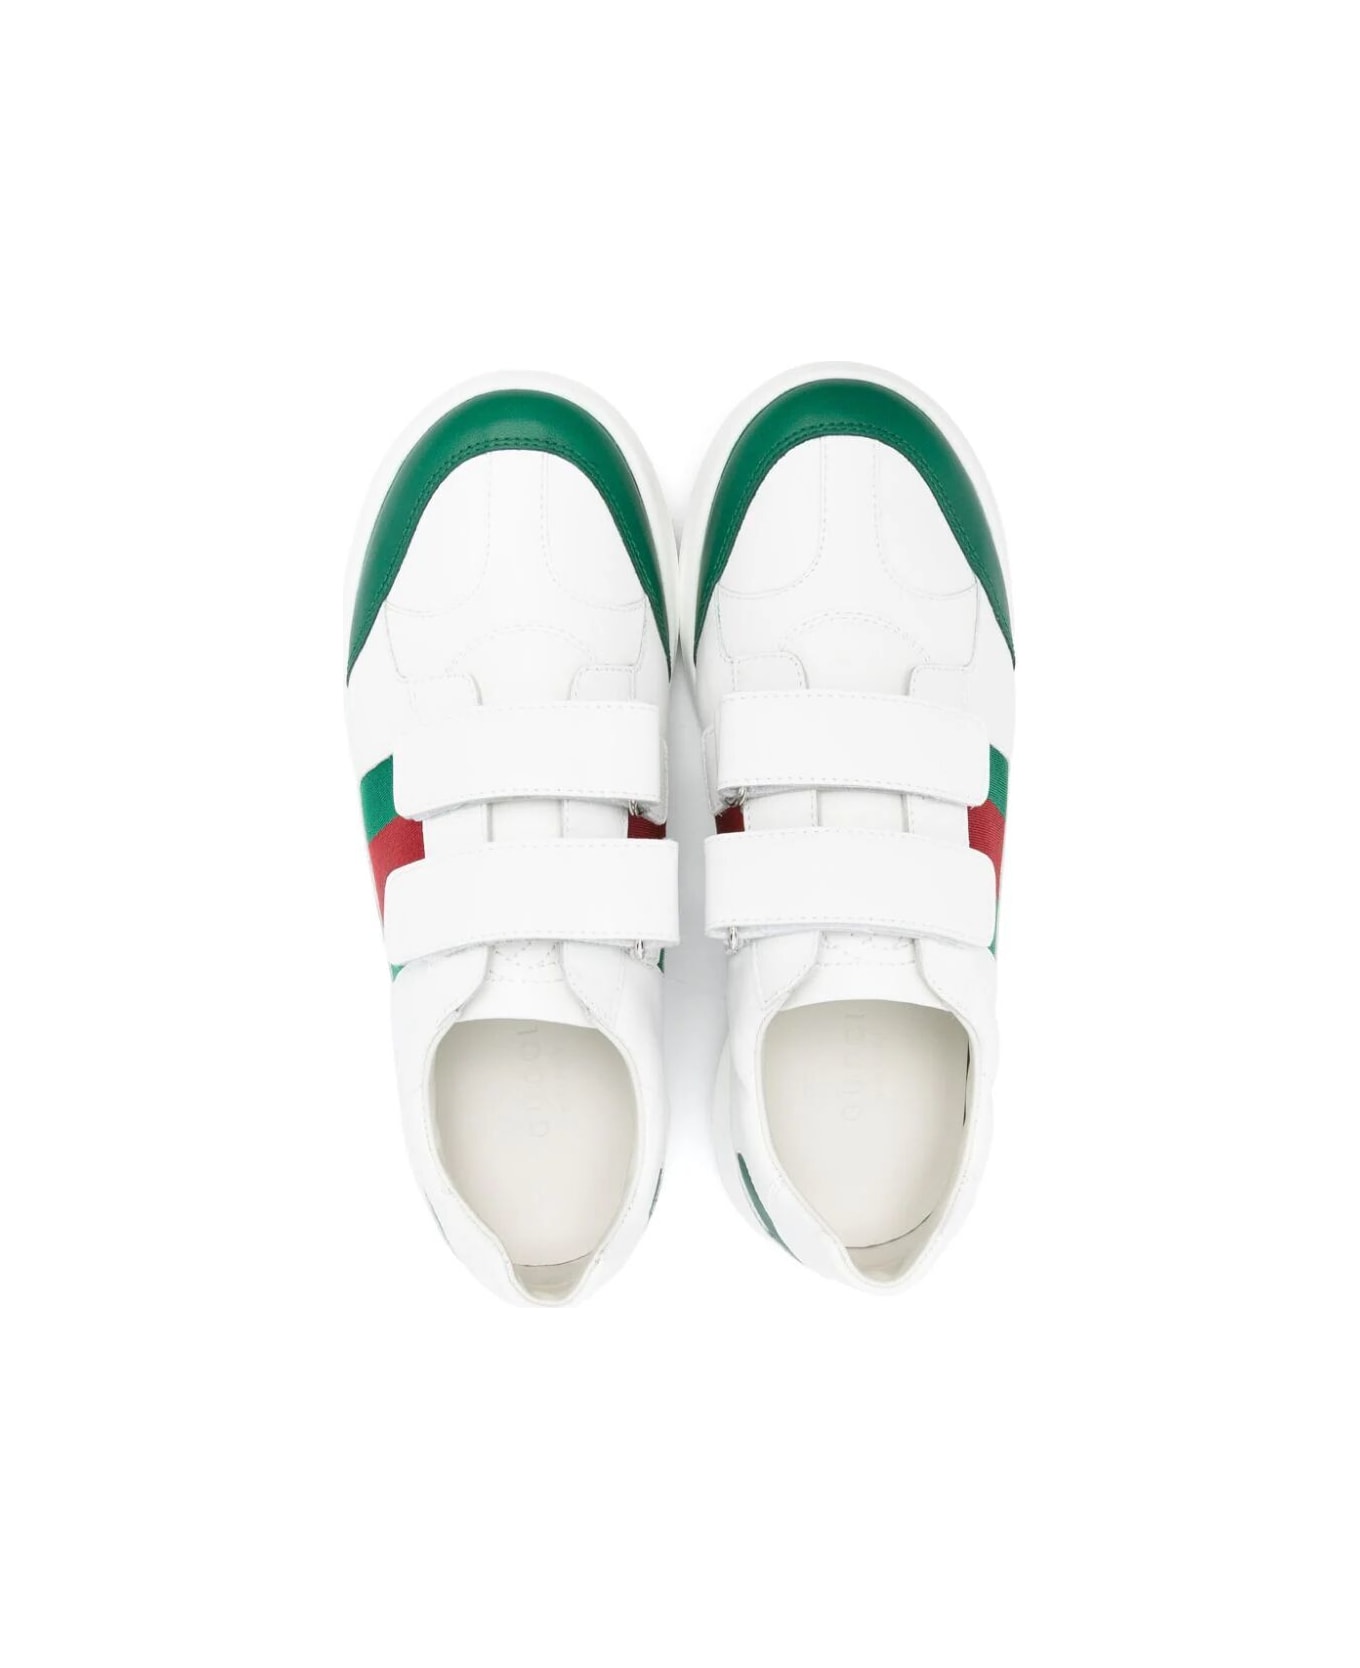 Gucci Sneaker Leather - Eme Gr W シューズ